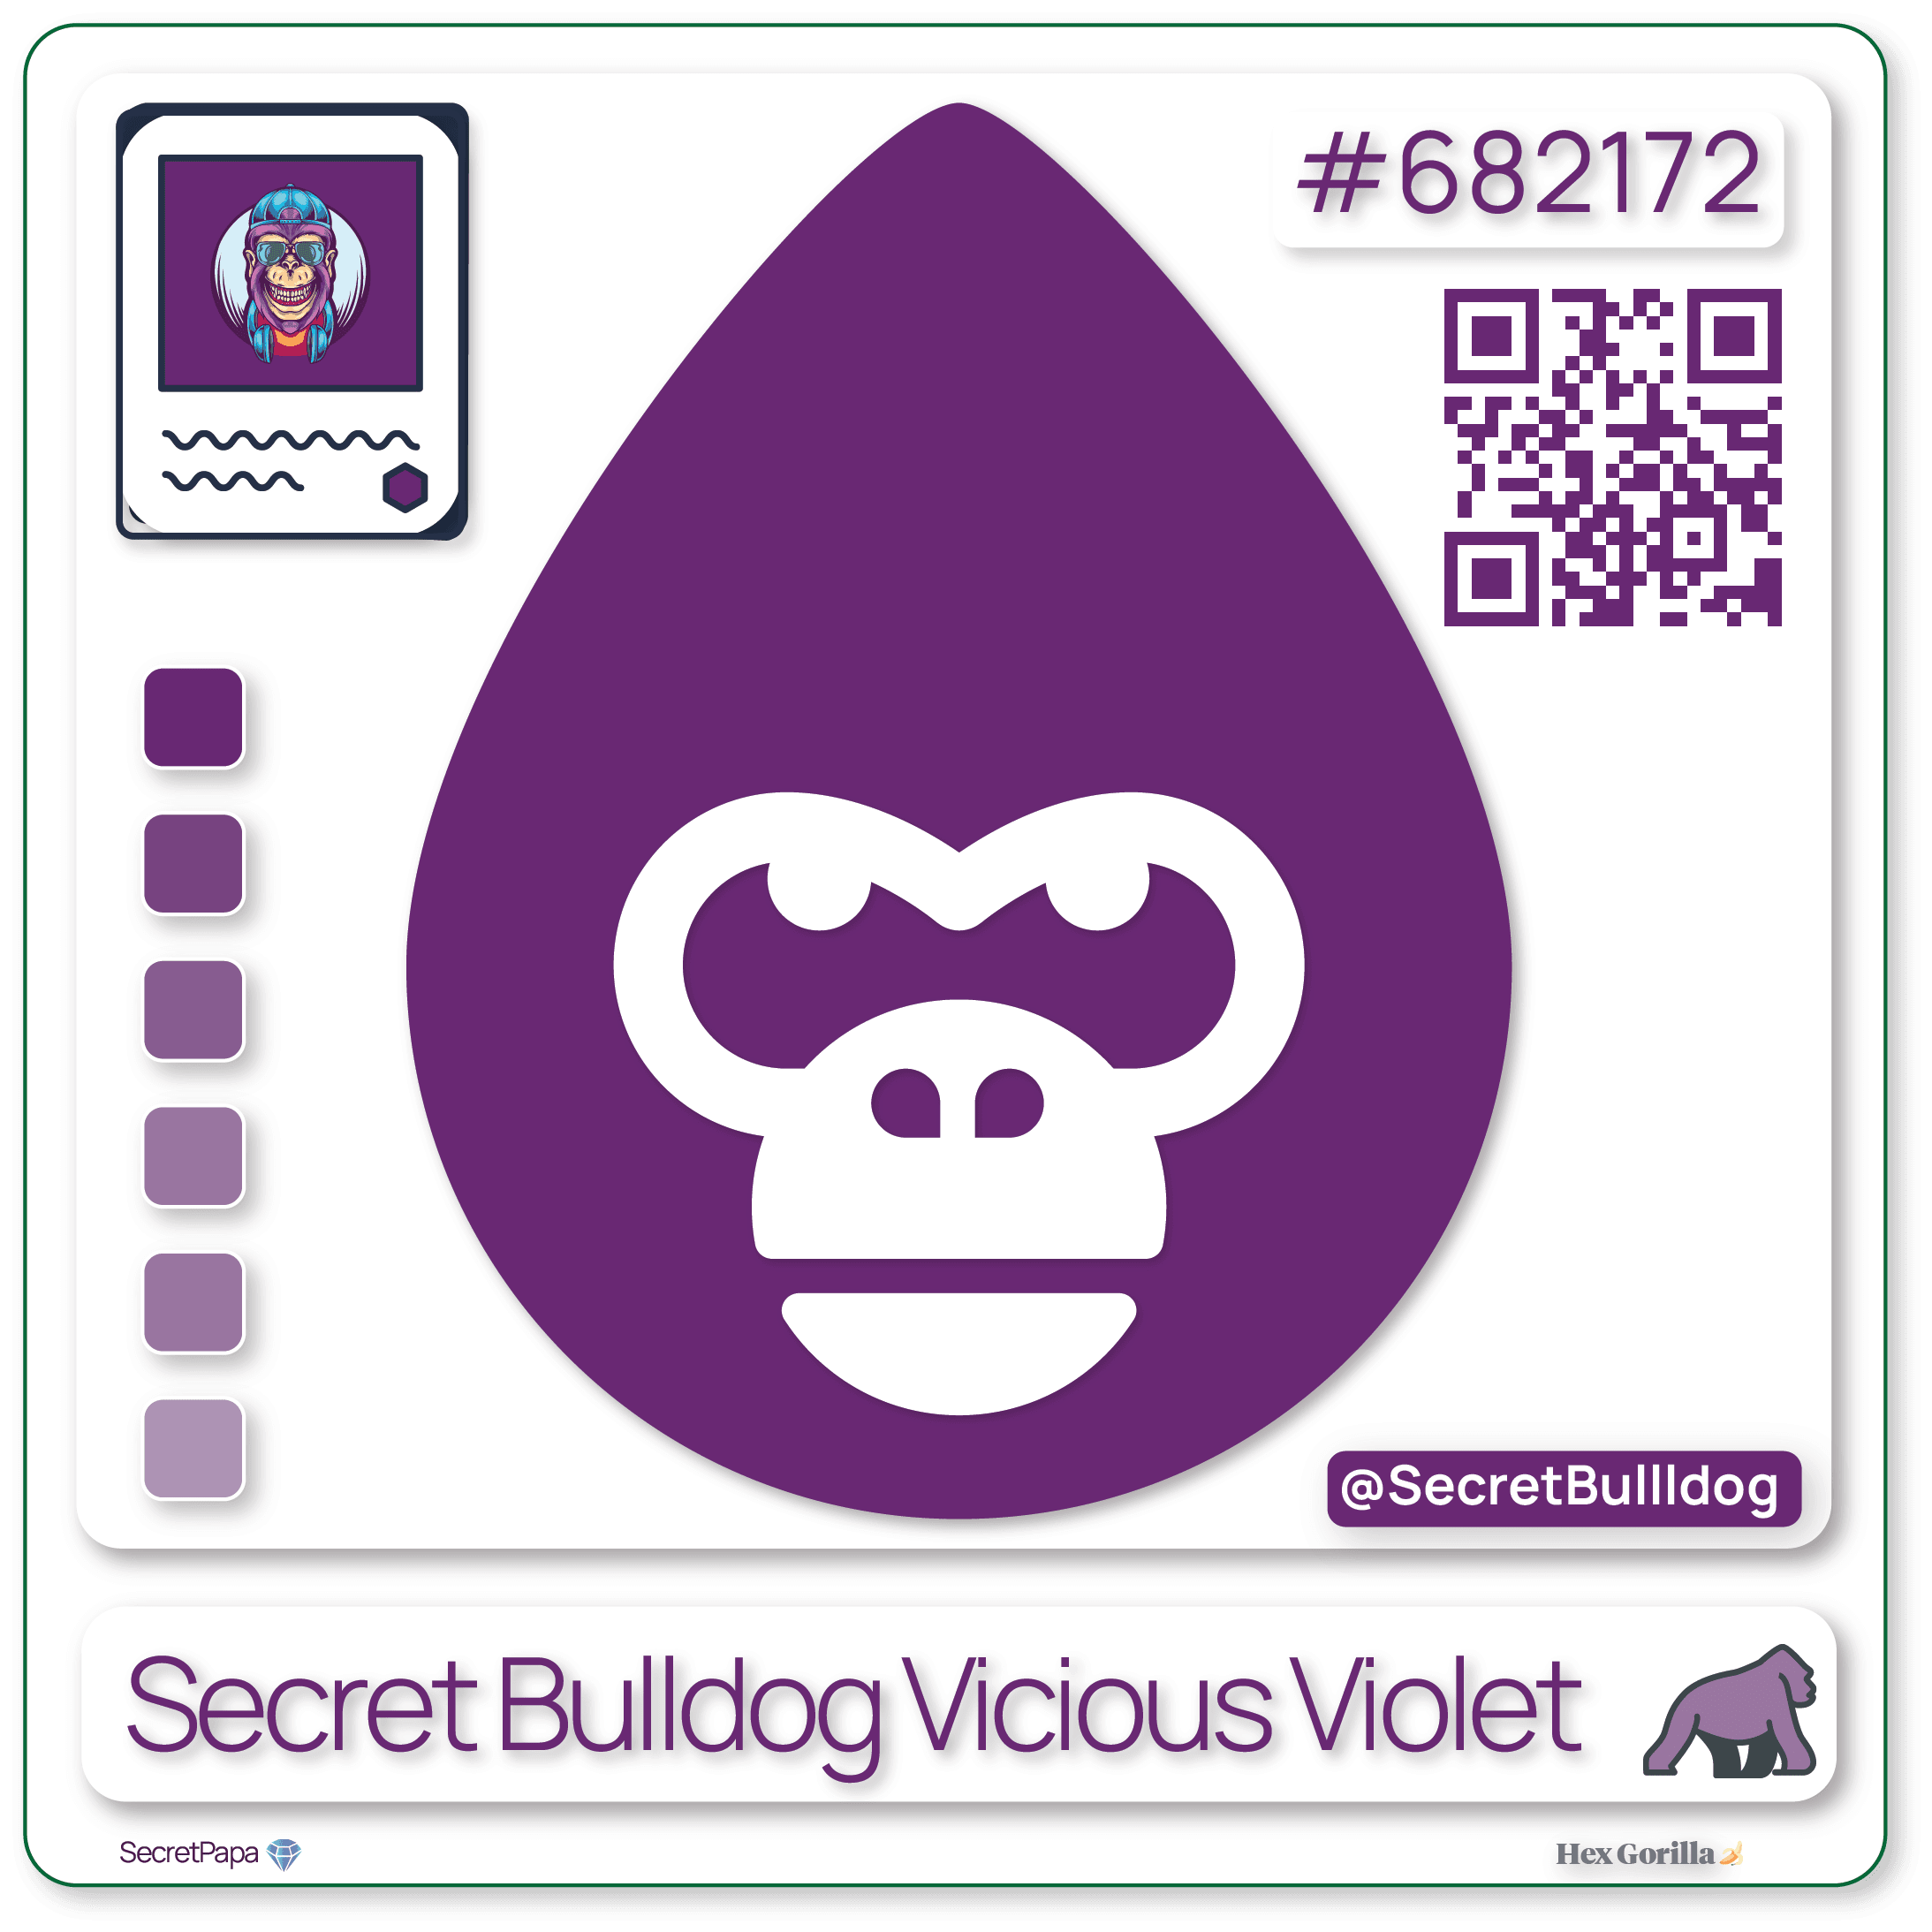 Secret Bulldog Vicious Violet